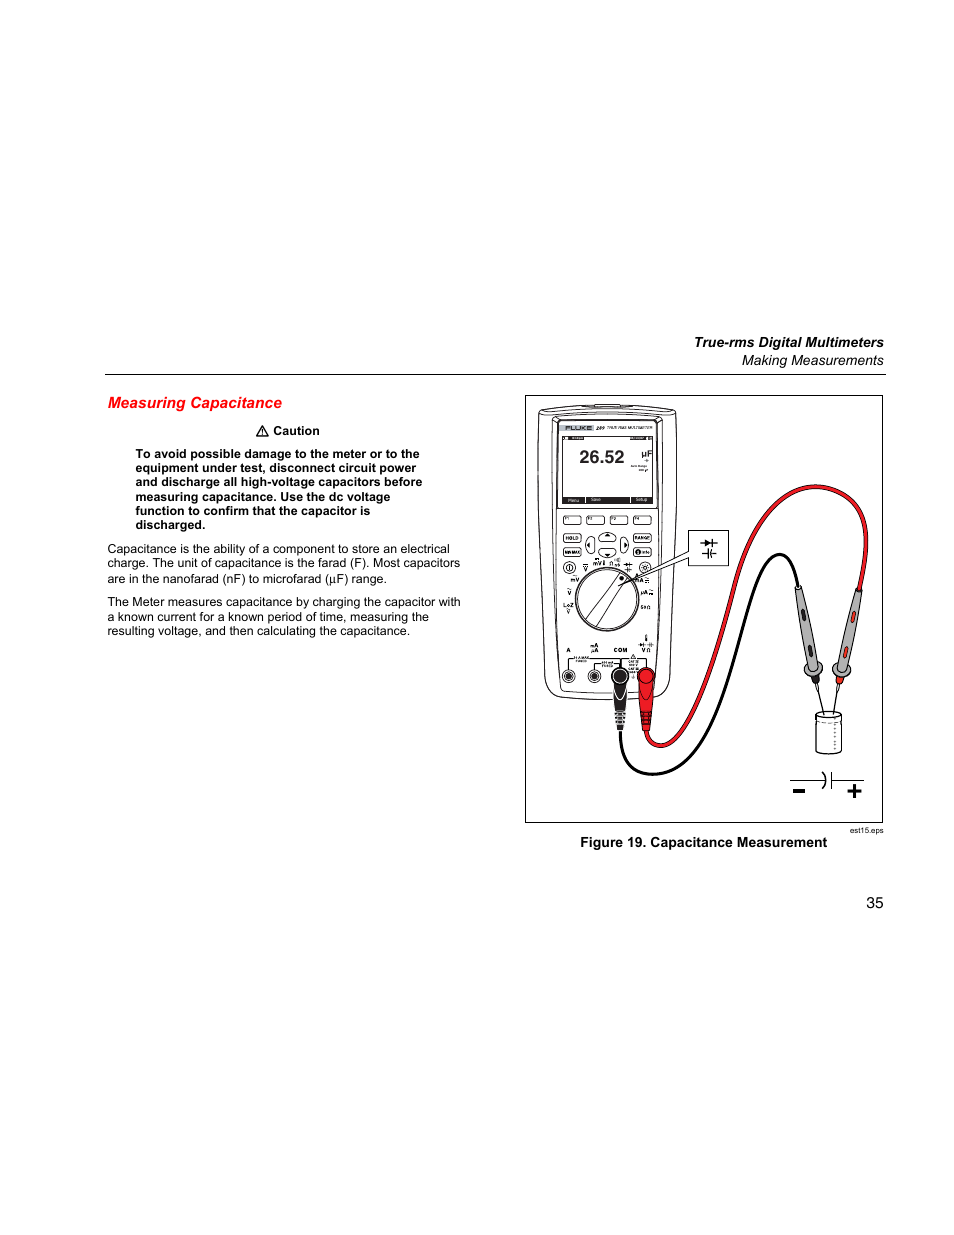 Measuring capacitance, 35 measuring capacitance, True-rms digital multimeters making measurements | Figure 19. capacitance measurement | Fluke 289 User Manual | Page 45 / 88